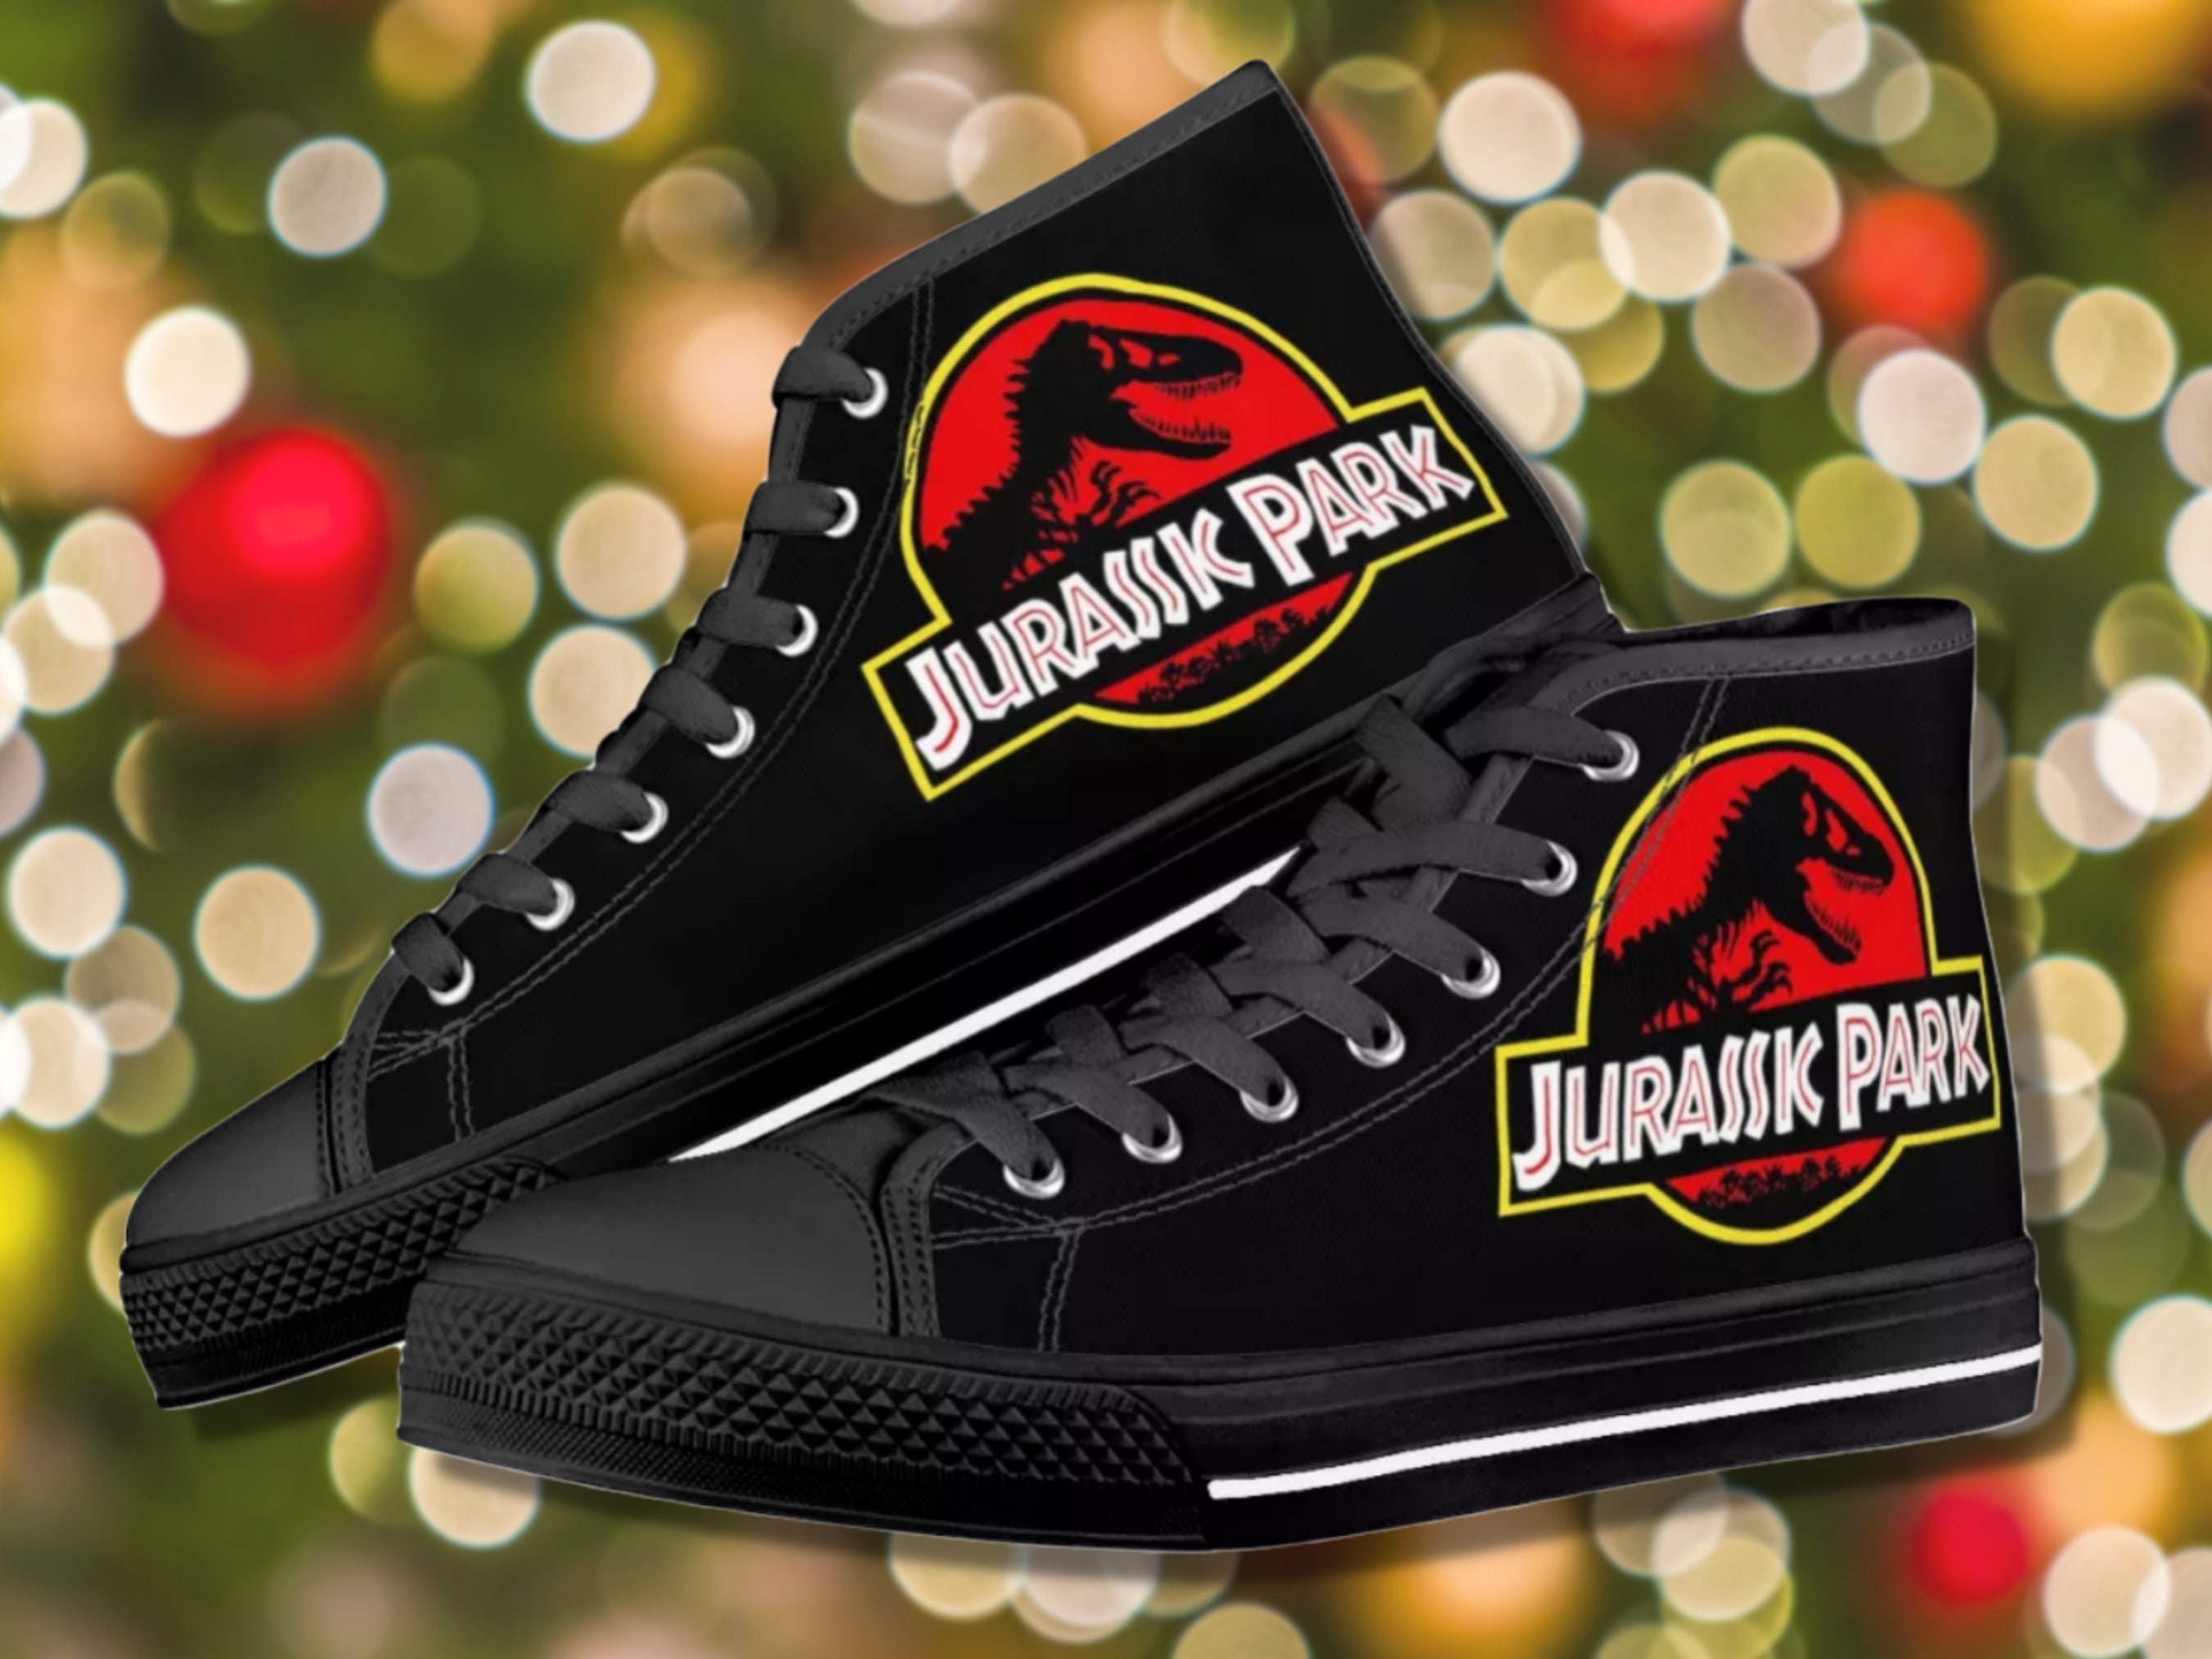 Jurassic park shoes, jurassic park merch, dinosaur sneakers